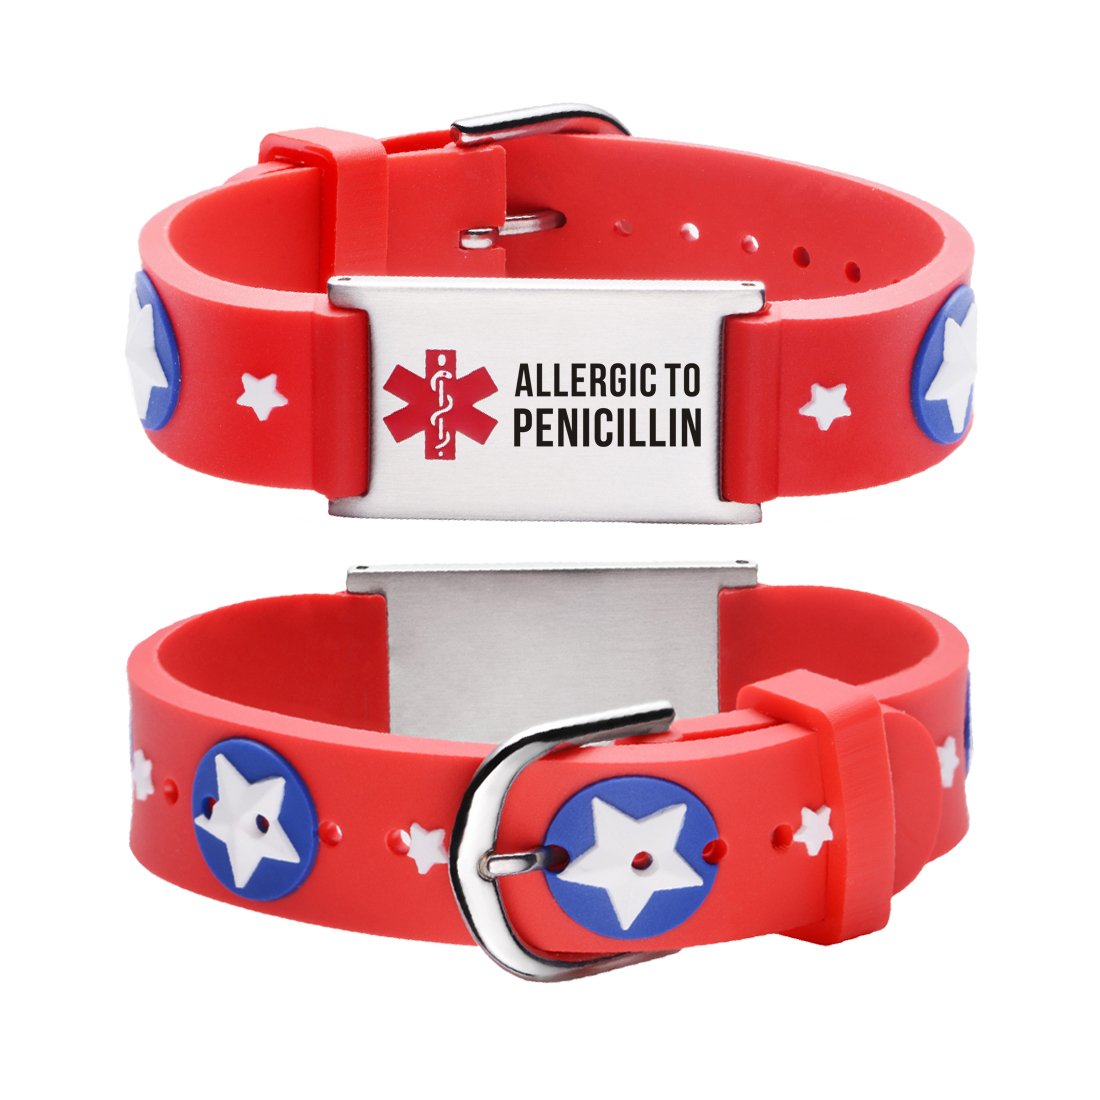 Allergic to Penicillin Alert Bracelet for kids-Red american star